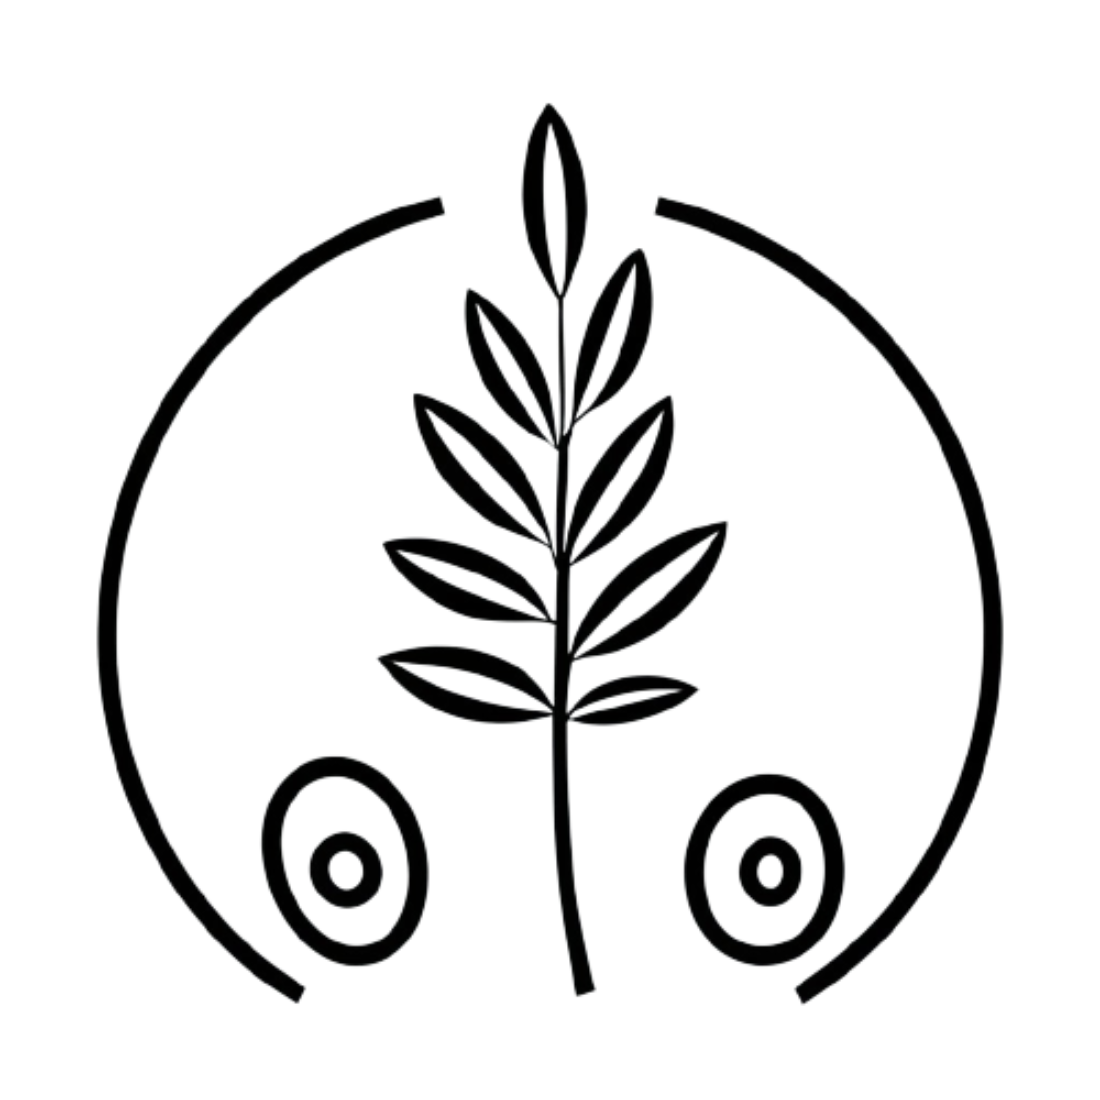 Veins of Life - Logo Illustration preview image.